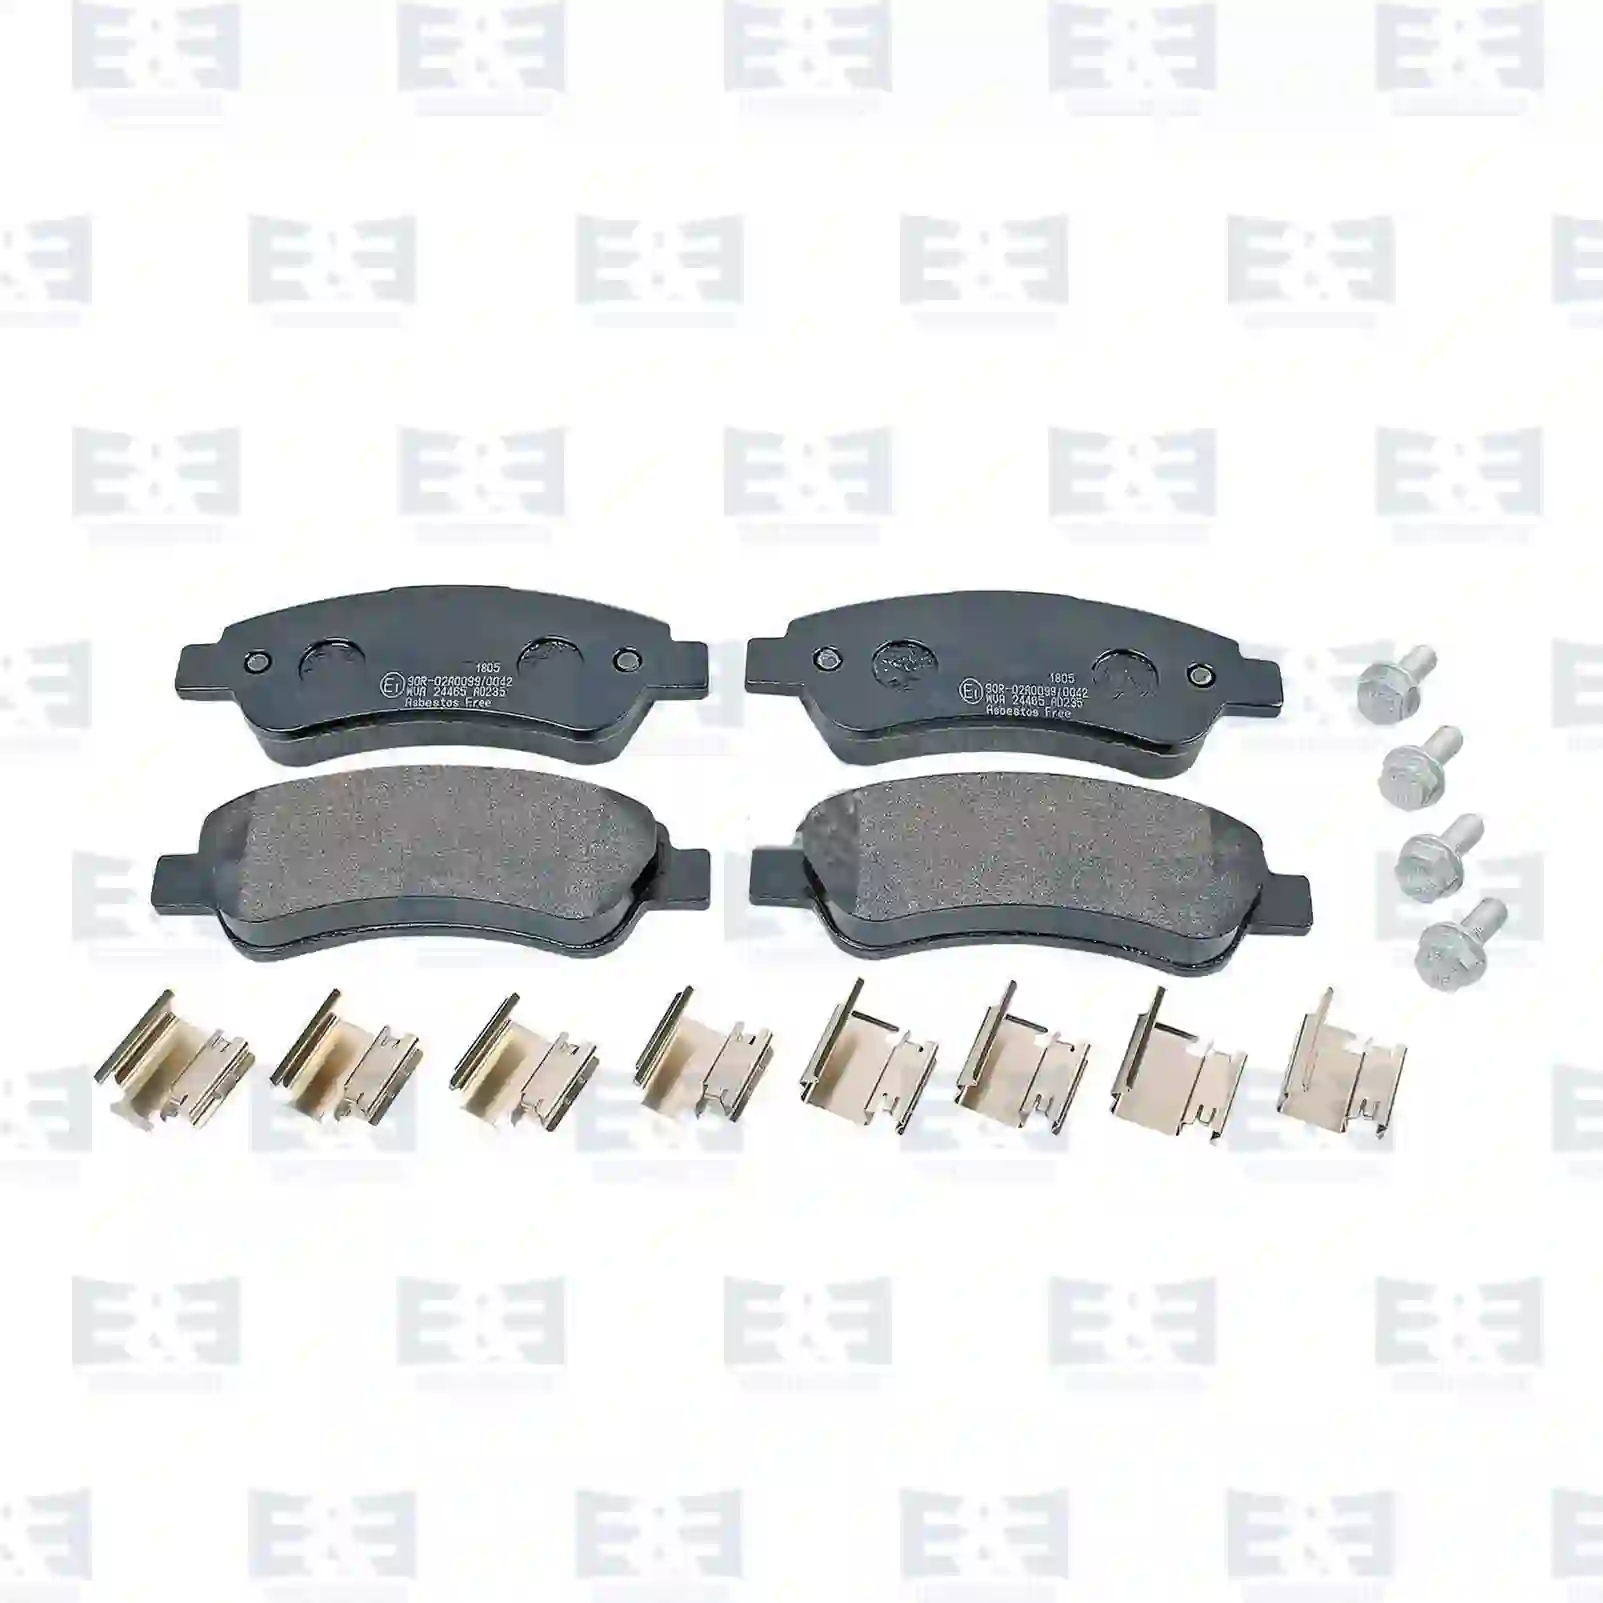 Disc brake pad kit, with accessory kit, 2E2296368, 1611140880, 1611457480, 425359, 425360, 425469, 71770028, 71772817, 71773149, 77363928, 77364016, 1611140880, 1611457480, 425359, 425360, 425469 ||  2E2296368 E&E Truck Spare Parts | Truck Spare Parts, Auotomotive Spare Parts Disc brake pad kit, with accessory kit, 2E2296368, 1611140880, 1611457480, 425359, 425360, 425469, 71770028, 71772817, 71773149, 77363928, 77364016, 1611140880, 1611457480, 425359, 425360, 425469 ||  2E2296368 E&E Truck Spare Parts | Truck Spare Parts, Auotomotive Spare Parts